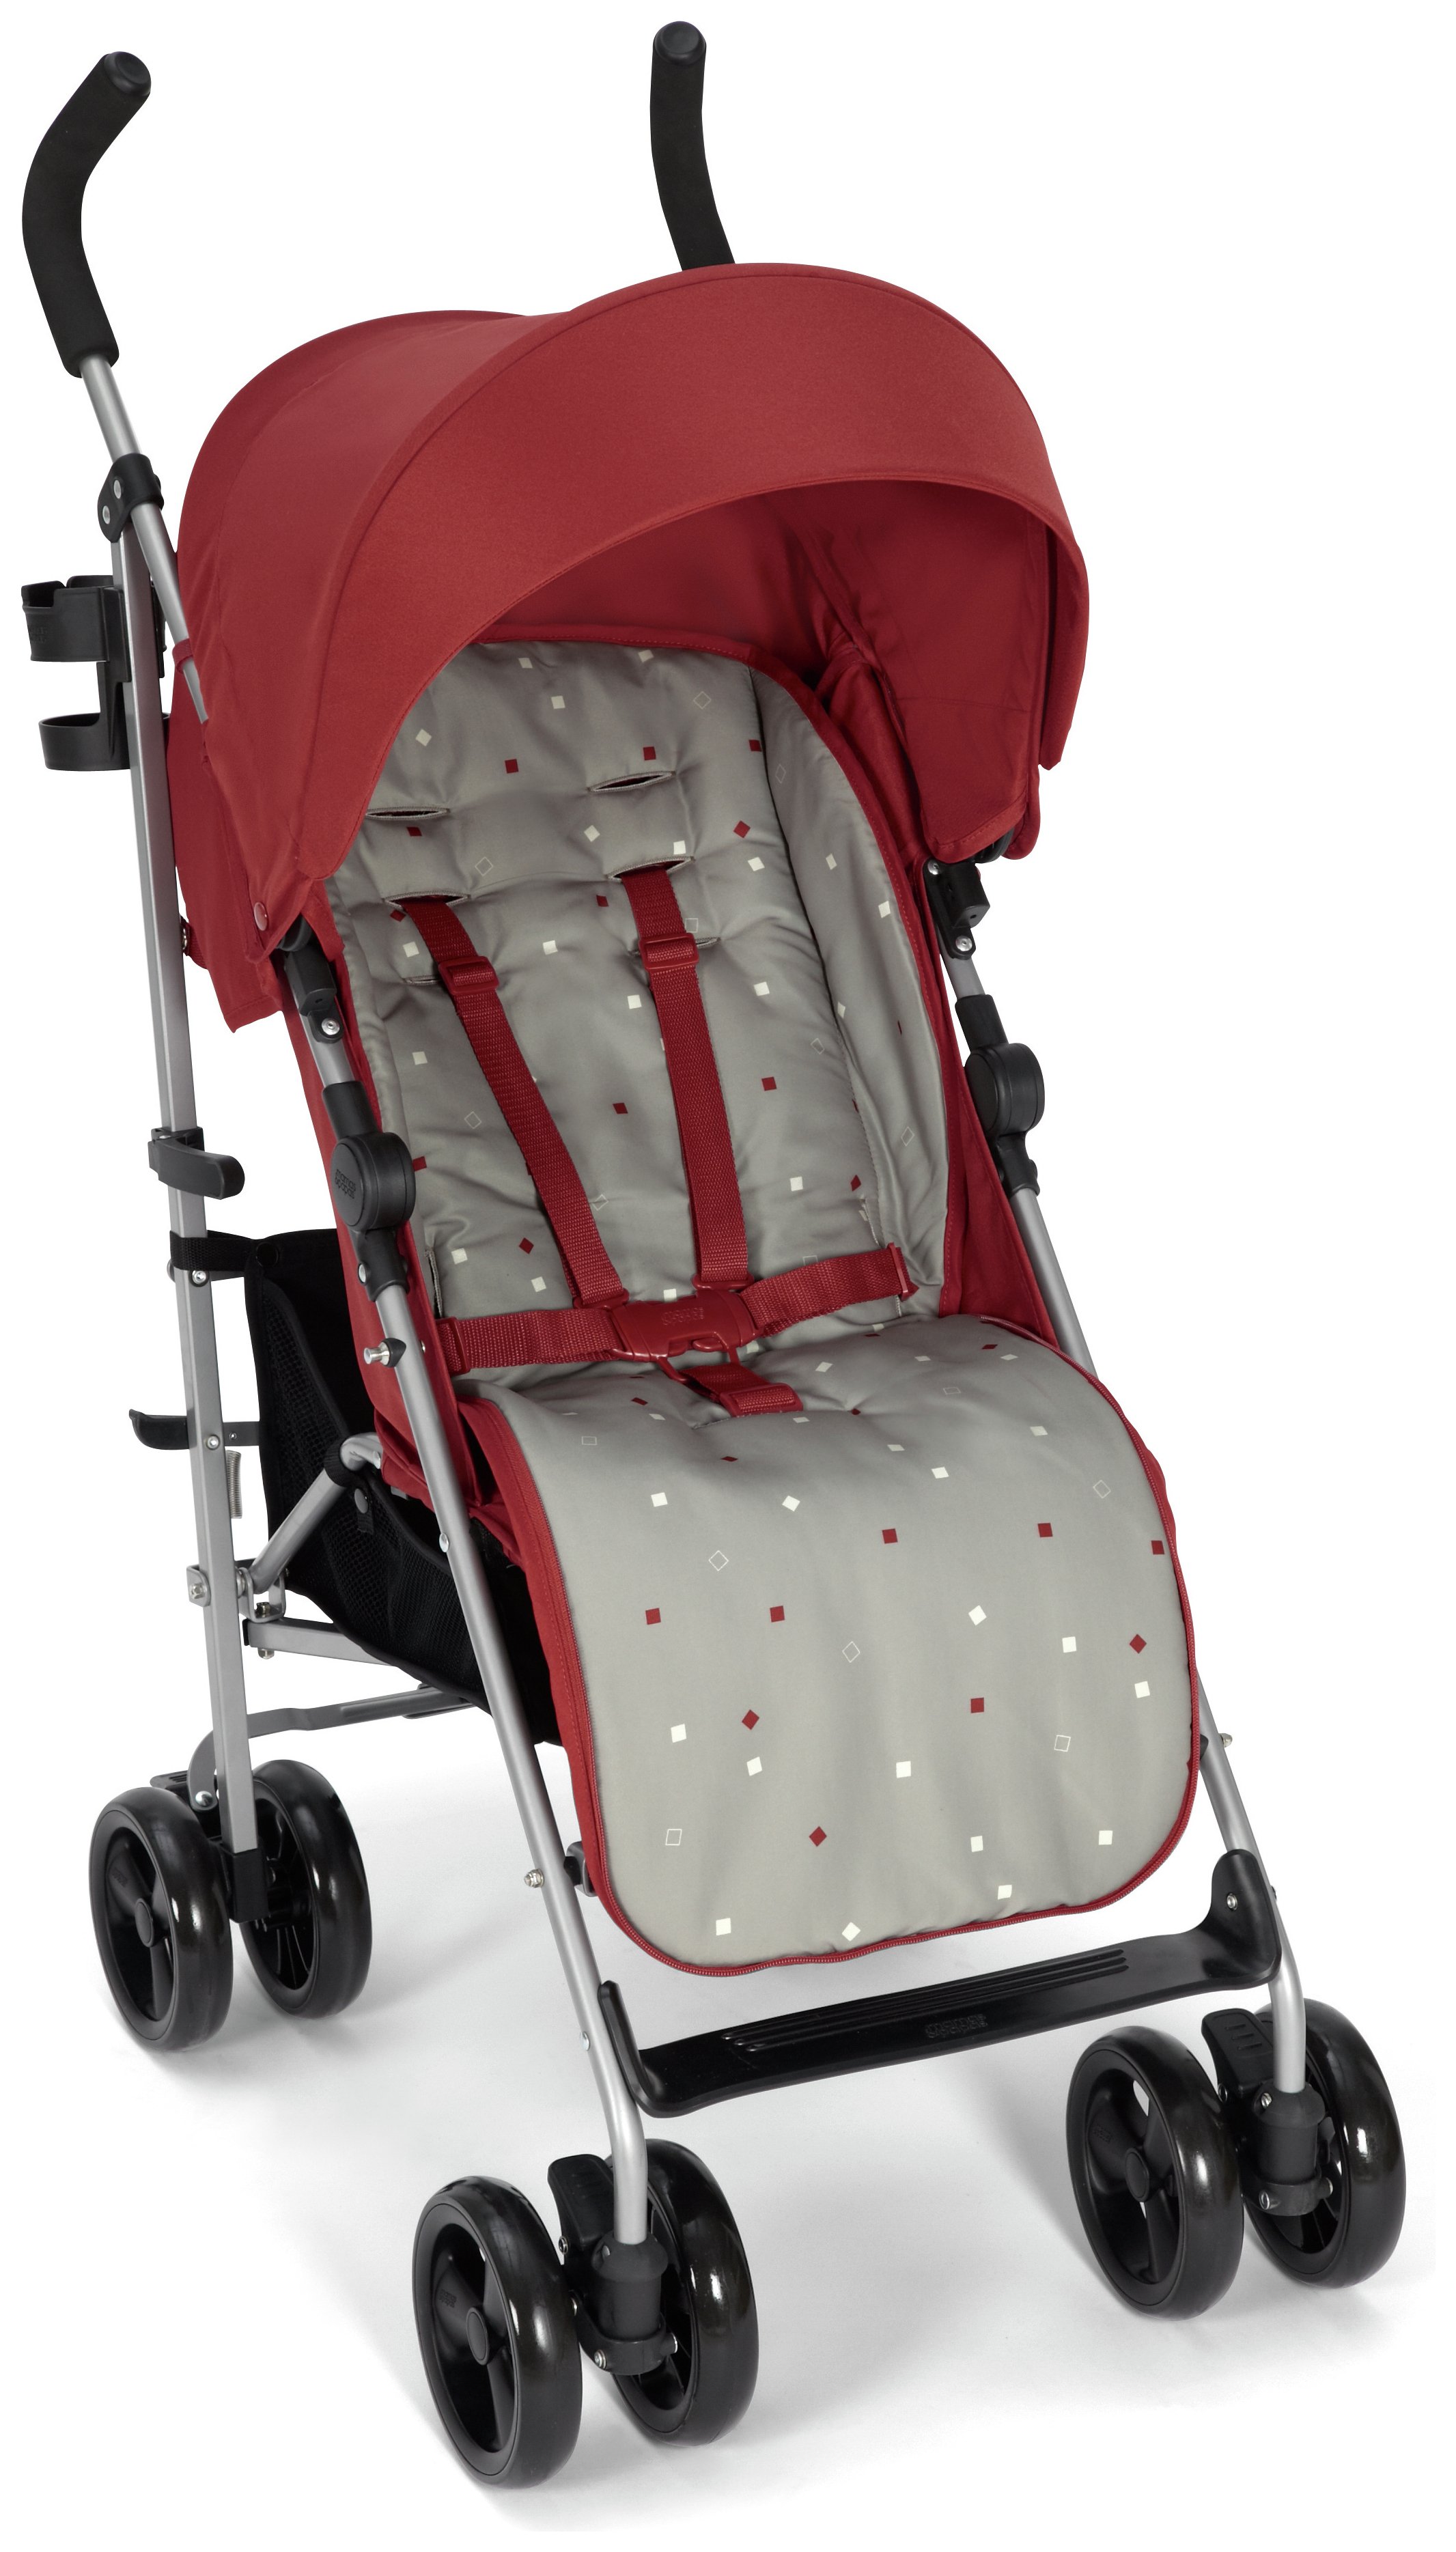 mamas and papas cruise stroller